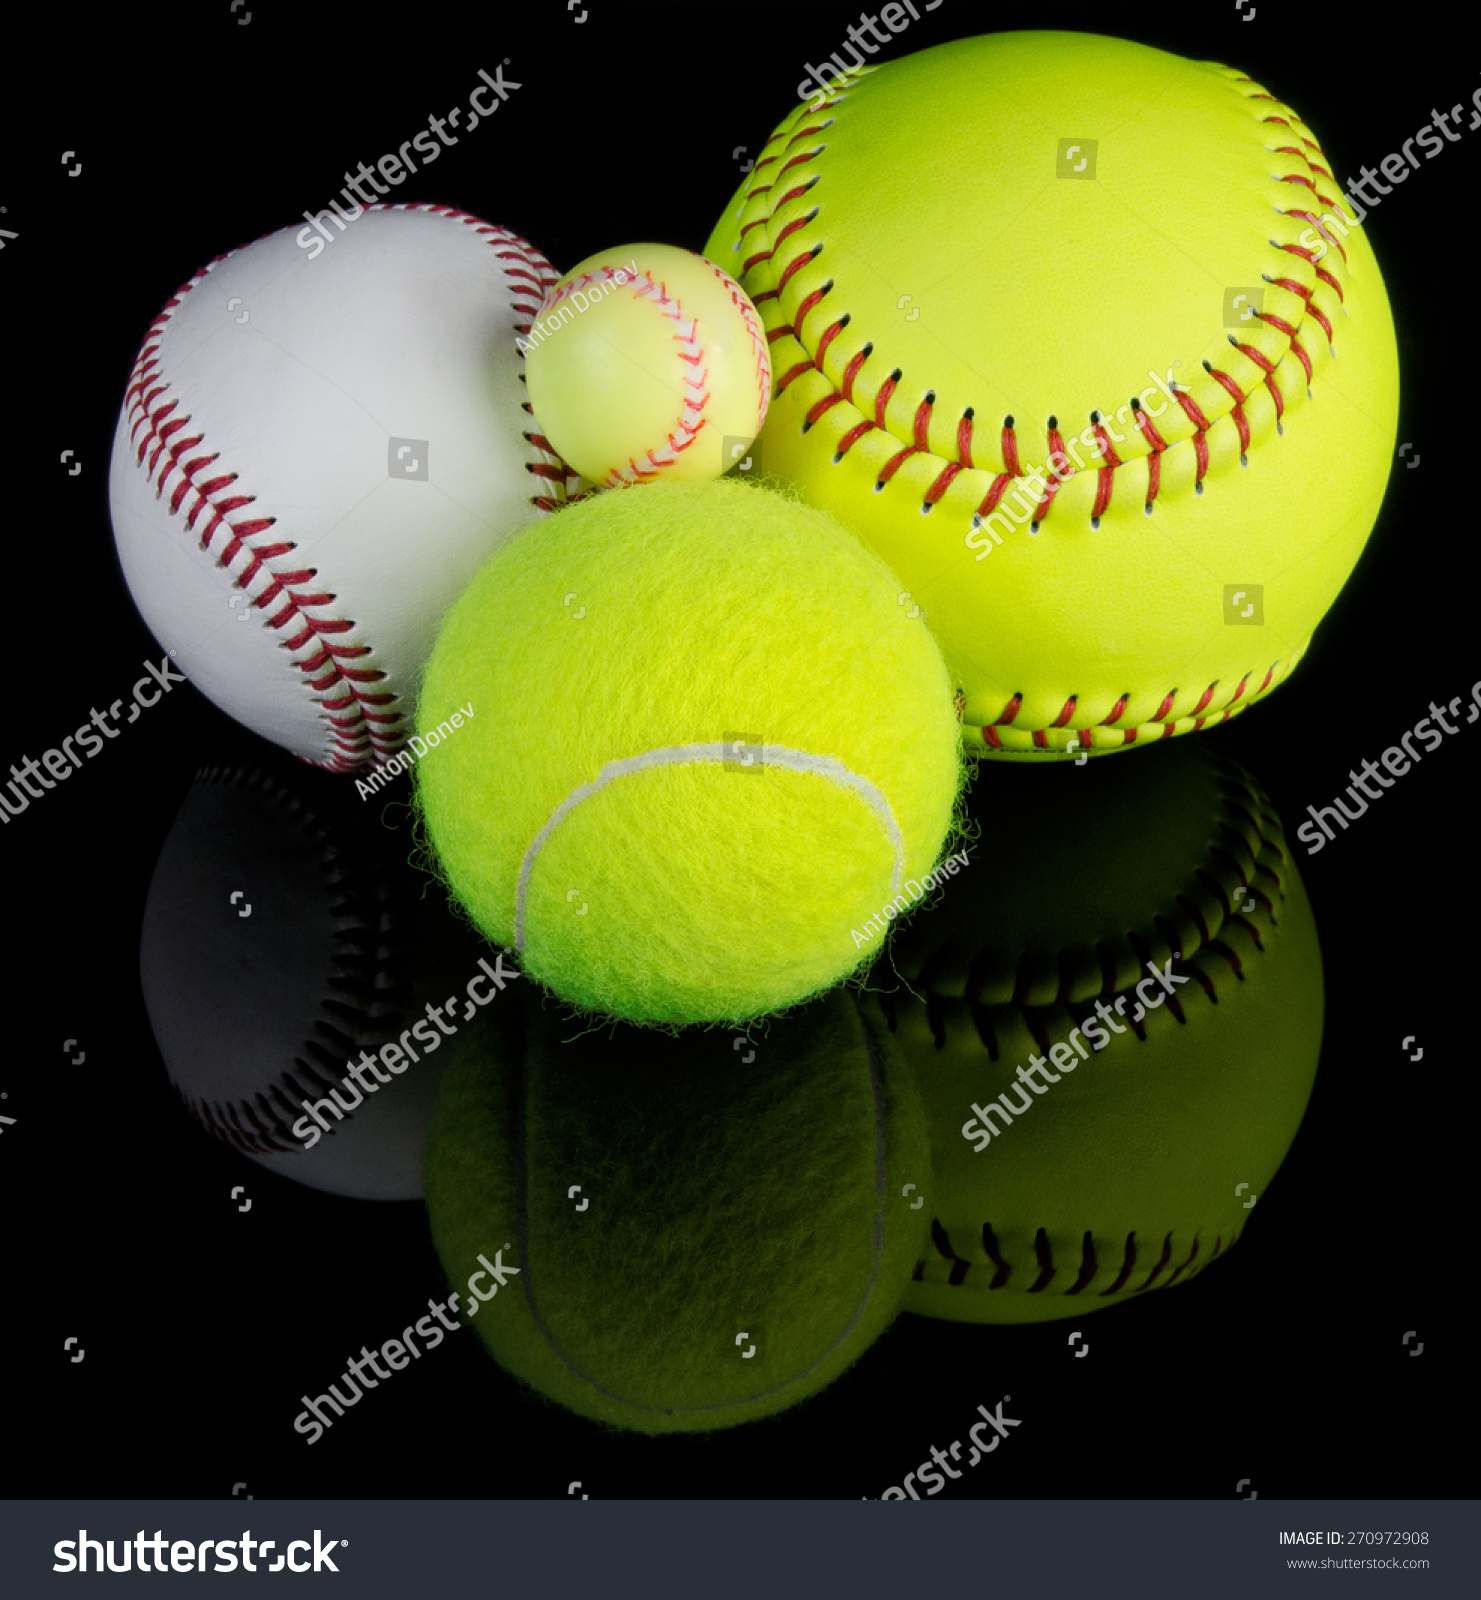 Softball vs baseball